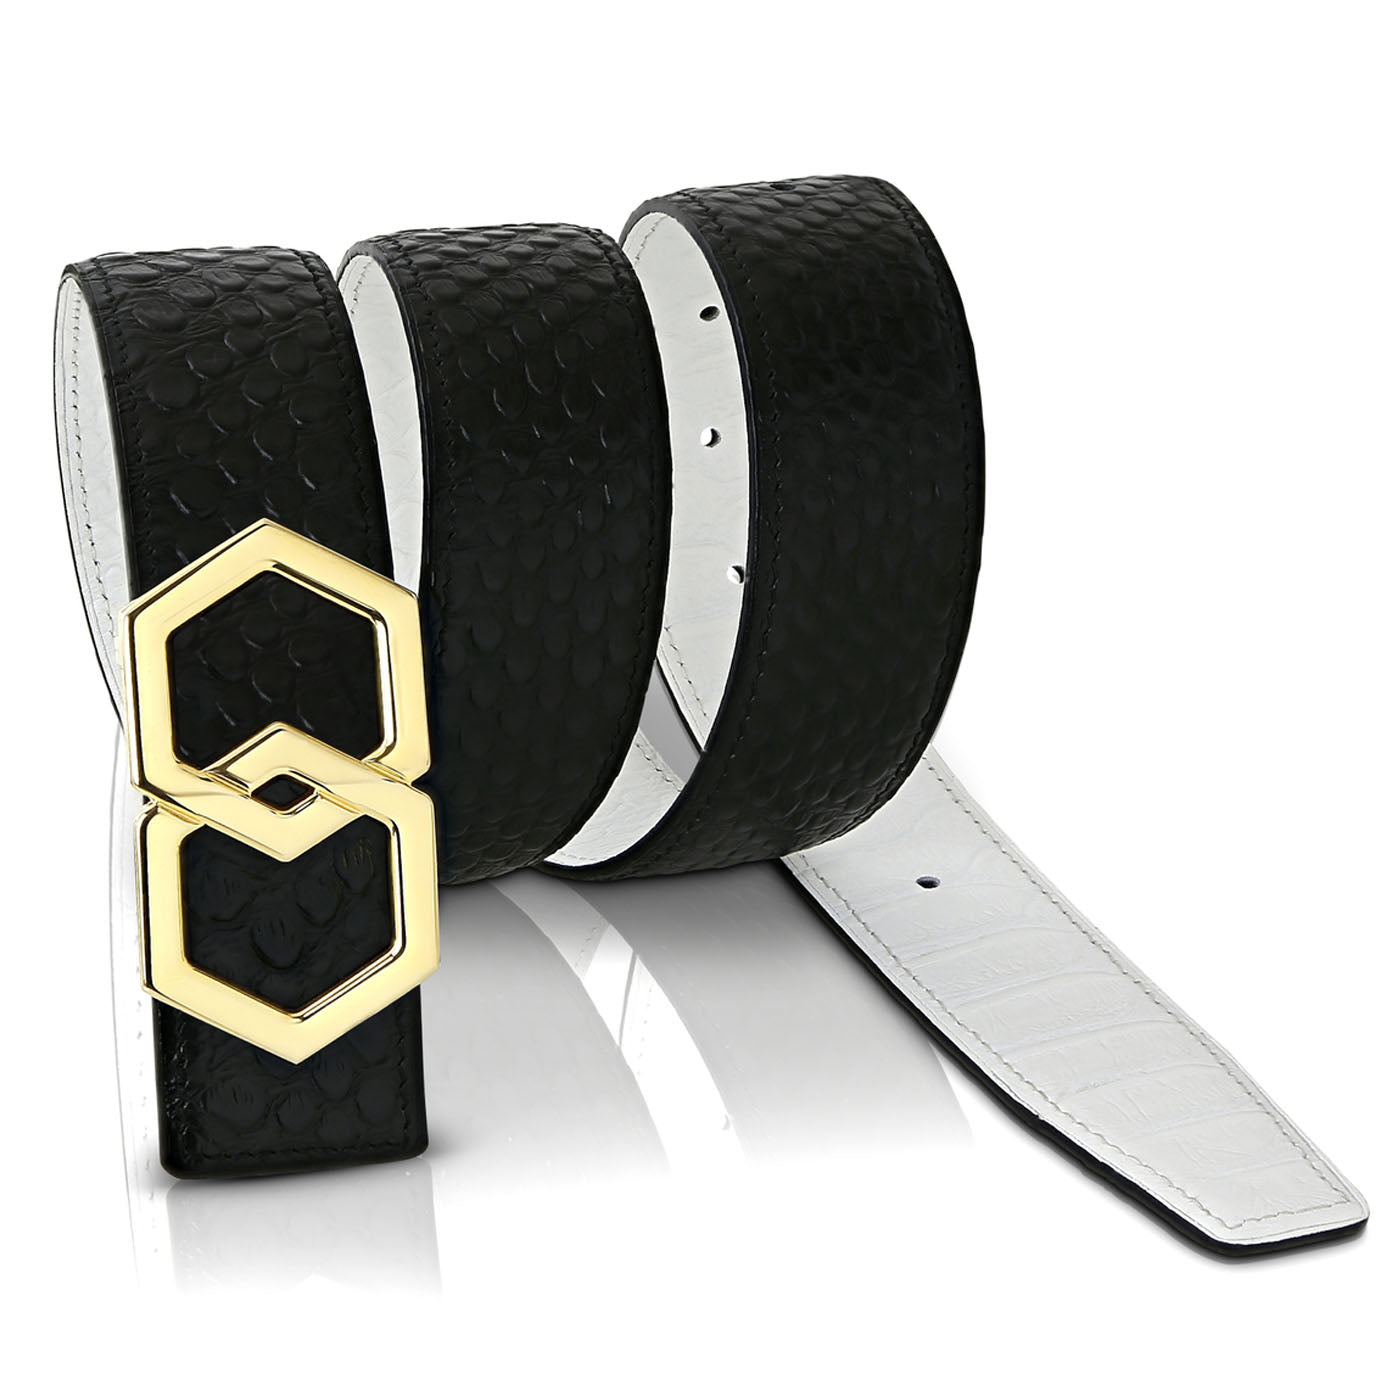 Men's Belt | Black Leather with Silver Buckle| LP 680 Metale | Hextie. Large: 33-34 in / 82-87 cm